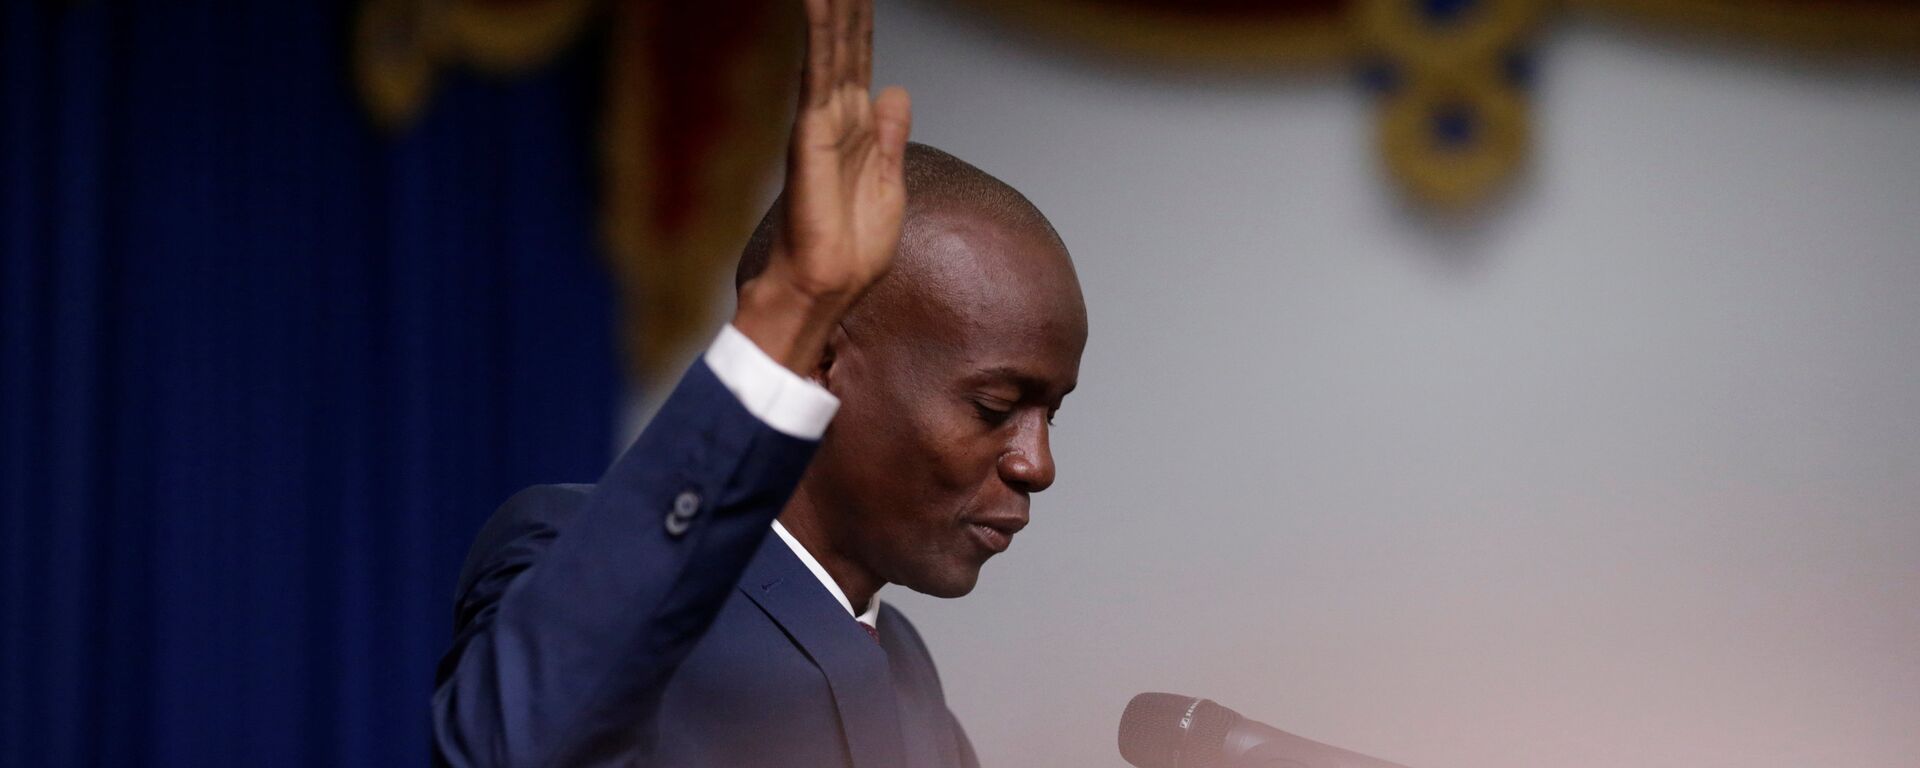 Haitian President Jovenel Moise takes the oath of office during his inauguration in Port-au-Prince, Haiti February 7, 2017 - Sputnik Mundo, 1920, 24.09.2019